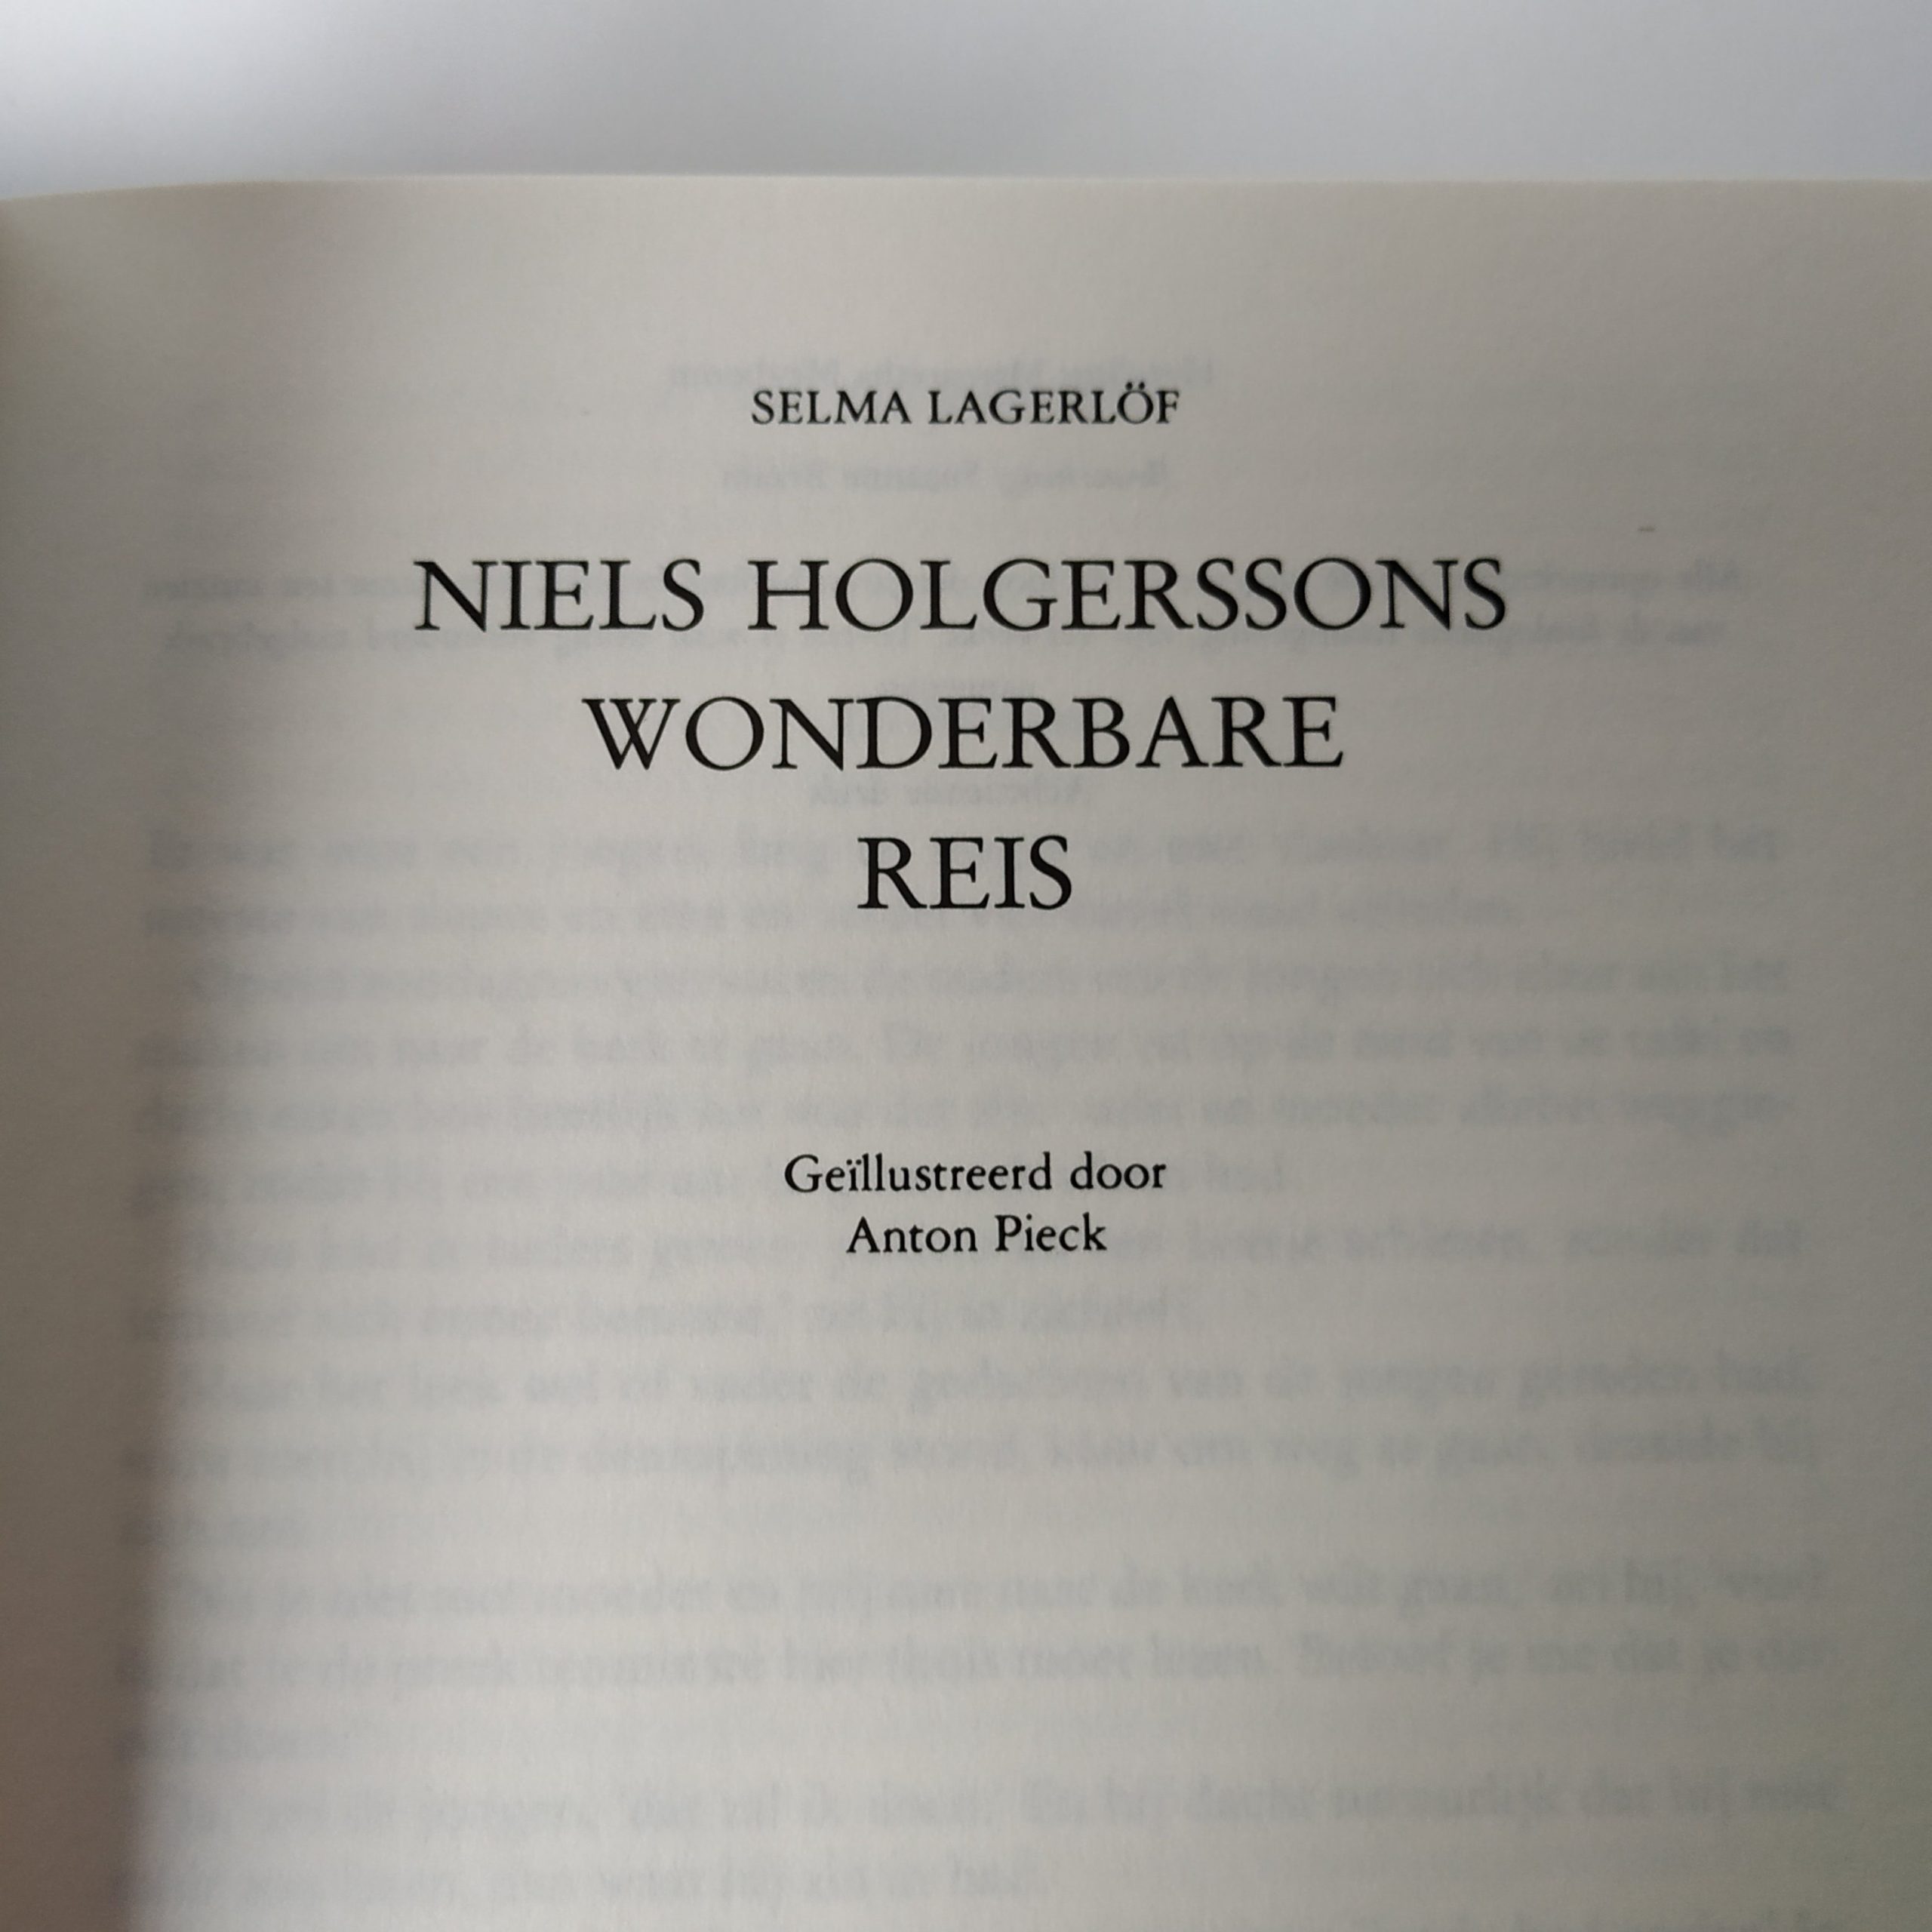 Boek Niels Holgerssons wonderbare reis – geschreven door selma lagerlof – hardcover (4)